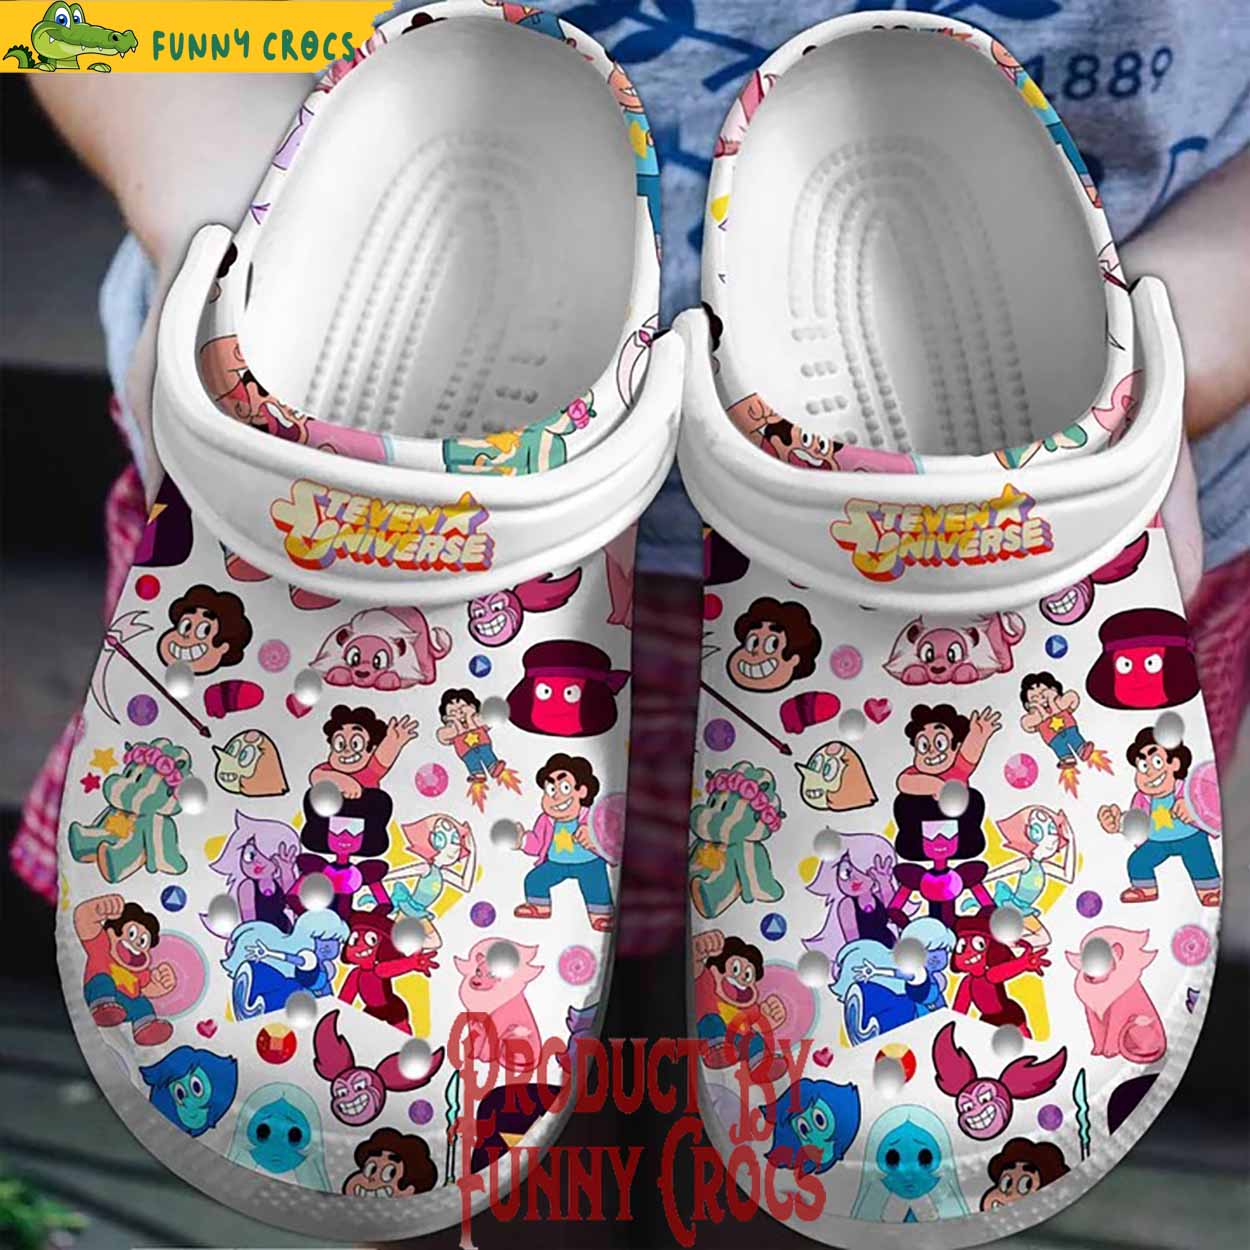 Steven Universe Cartoon Network Crocs Shoes - Discover Comfort And ...